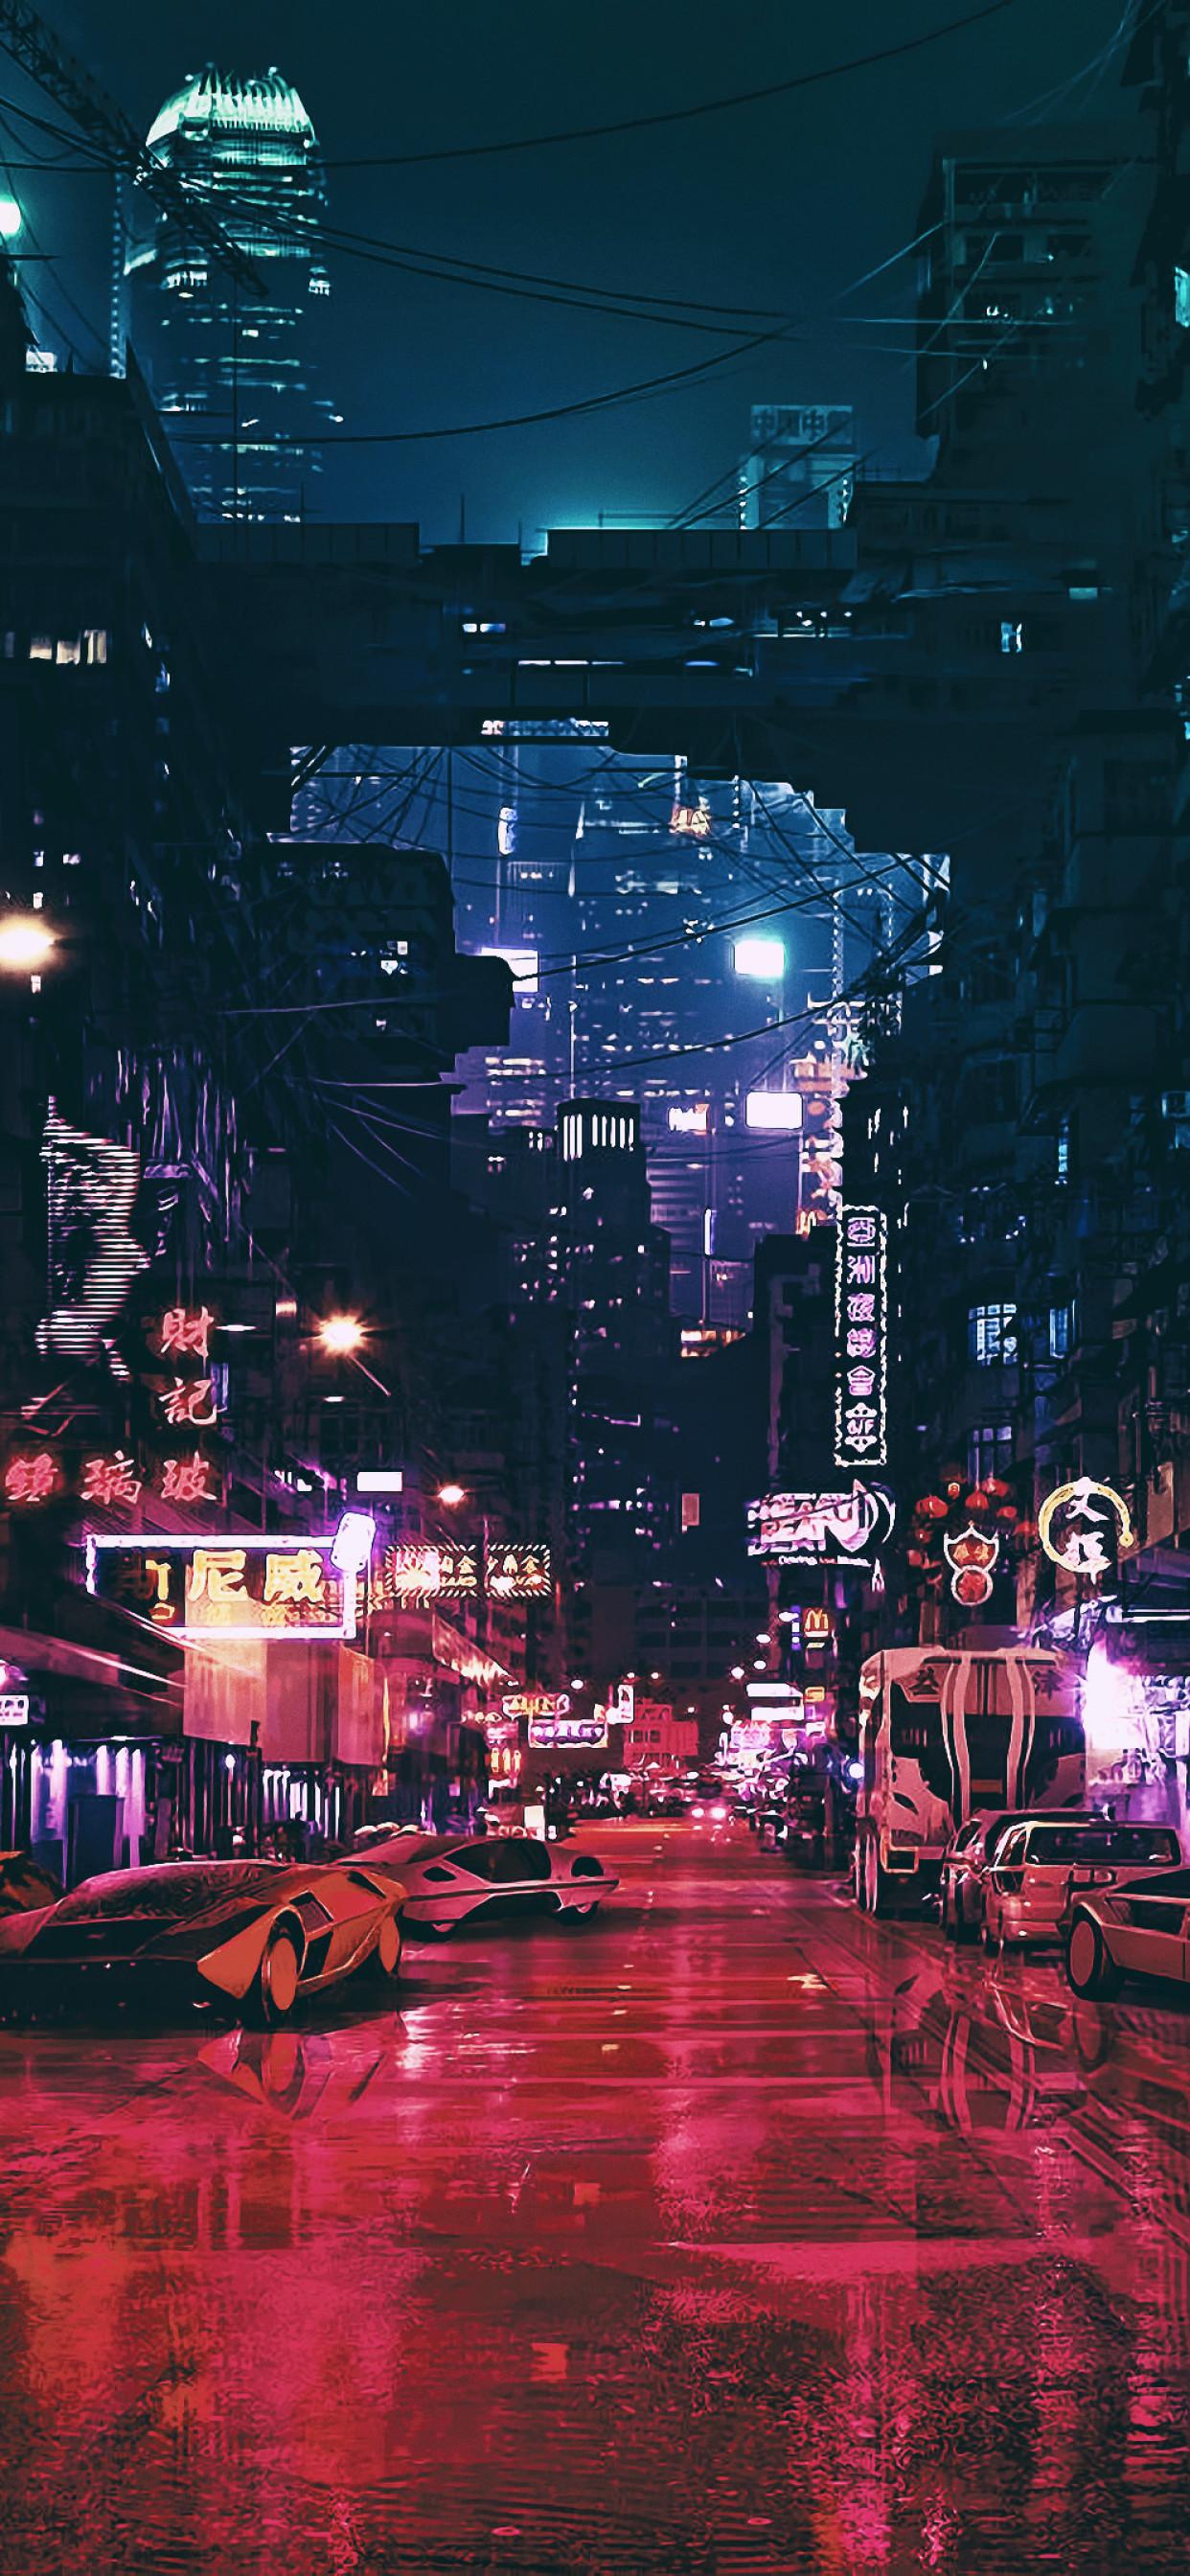 Cyberpunk Futuristic City Science Fiction Concept